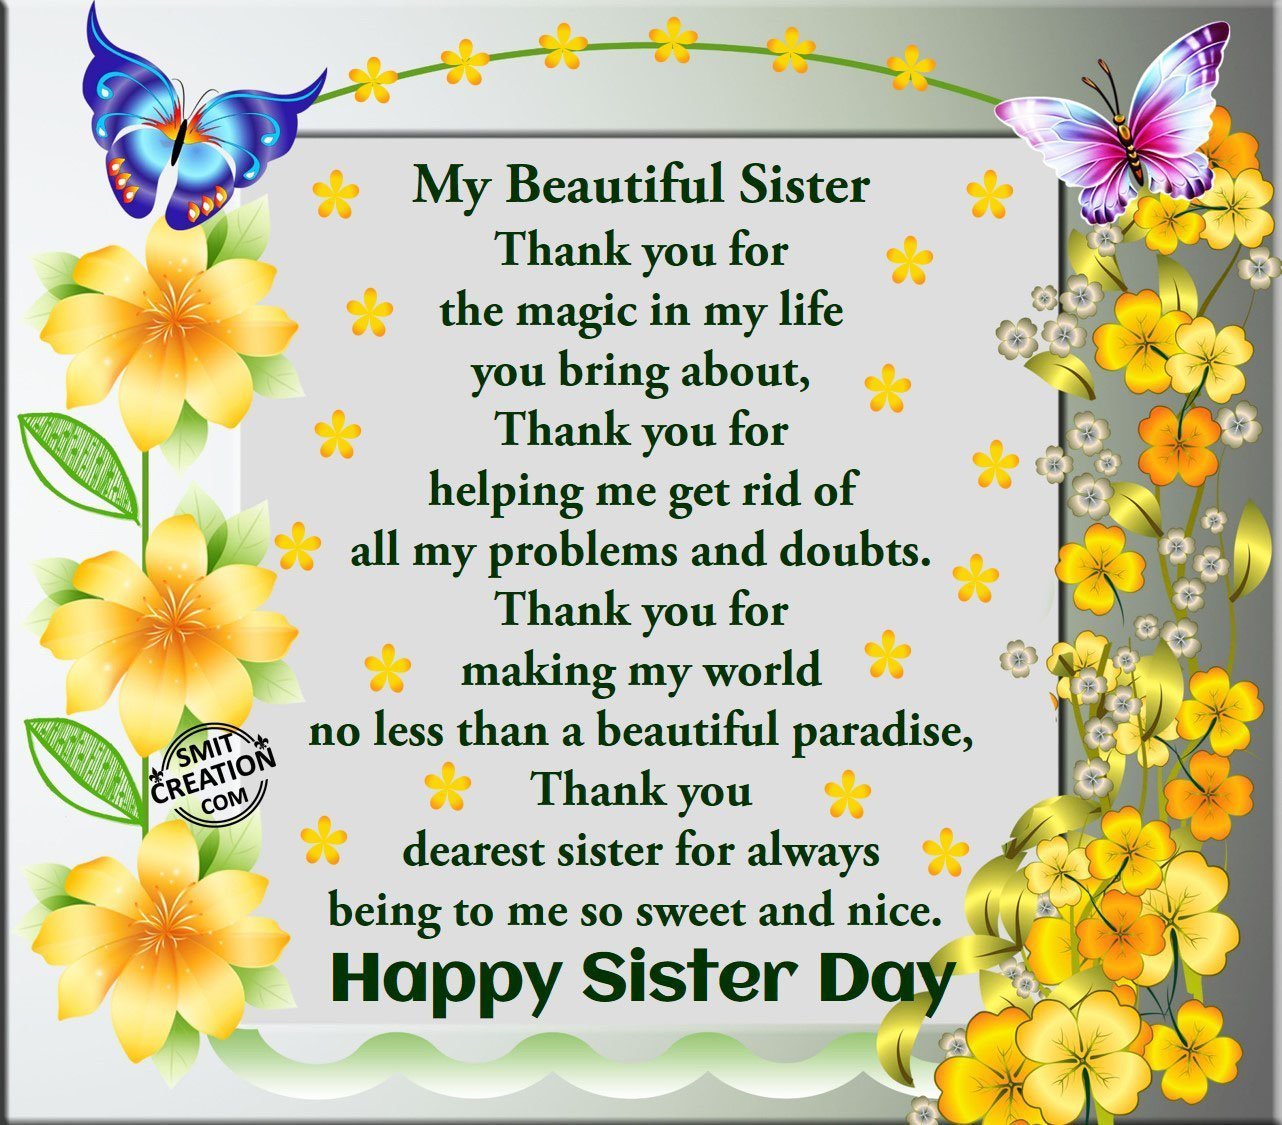 Sister s birthday. Happy Birthday Dear sister. Happy Birthday my sister. Happy Birthday my Dear sister. Sister Day.